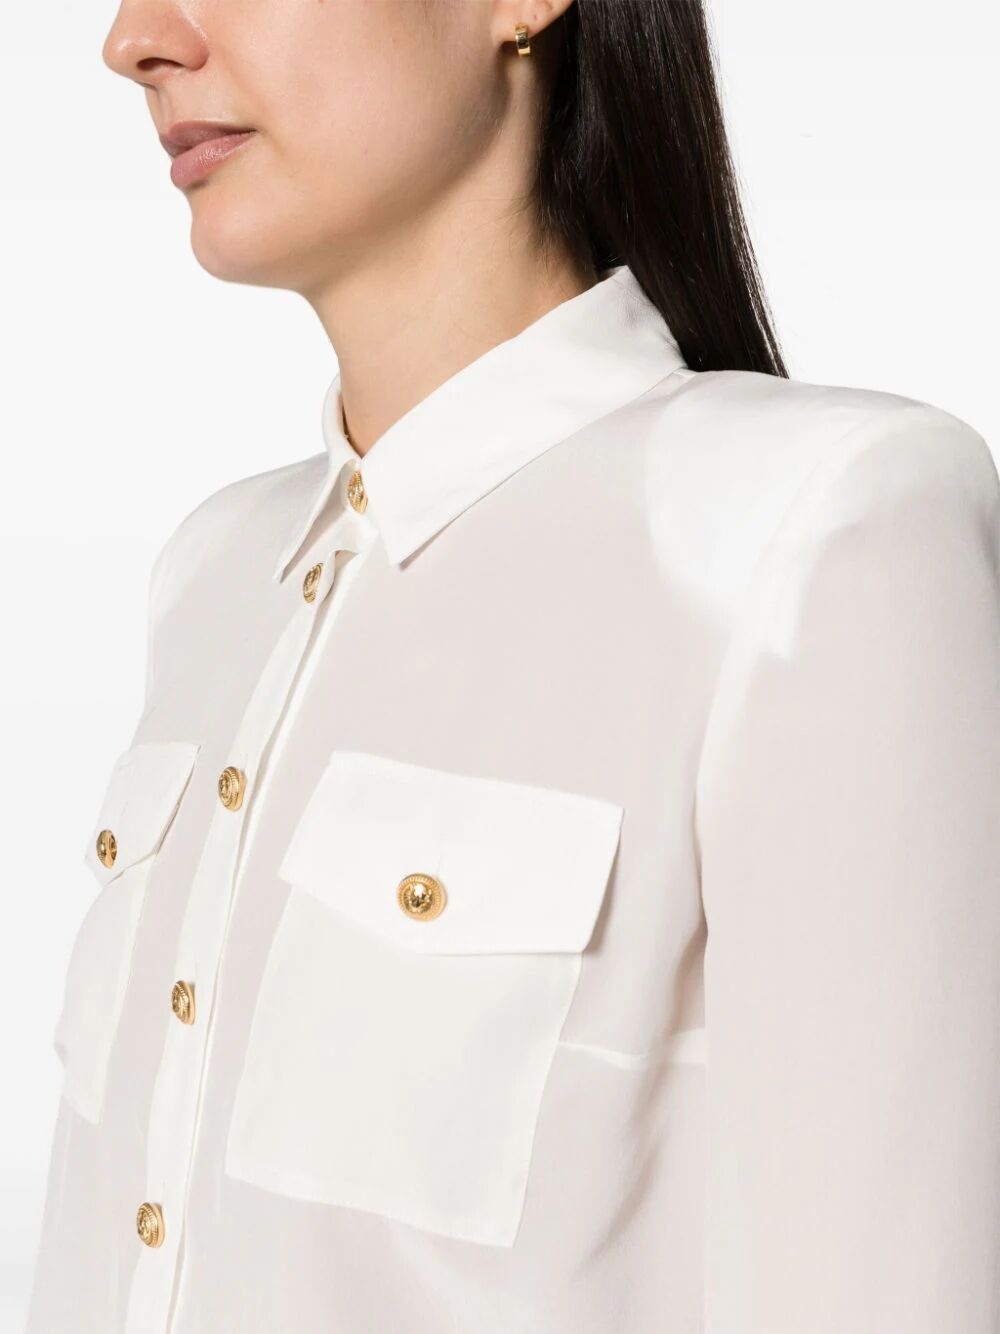 Shirt with golden buttons - 5